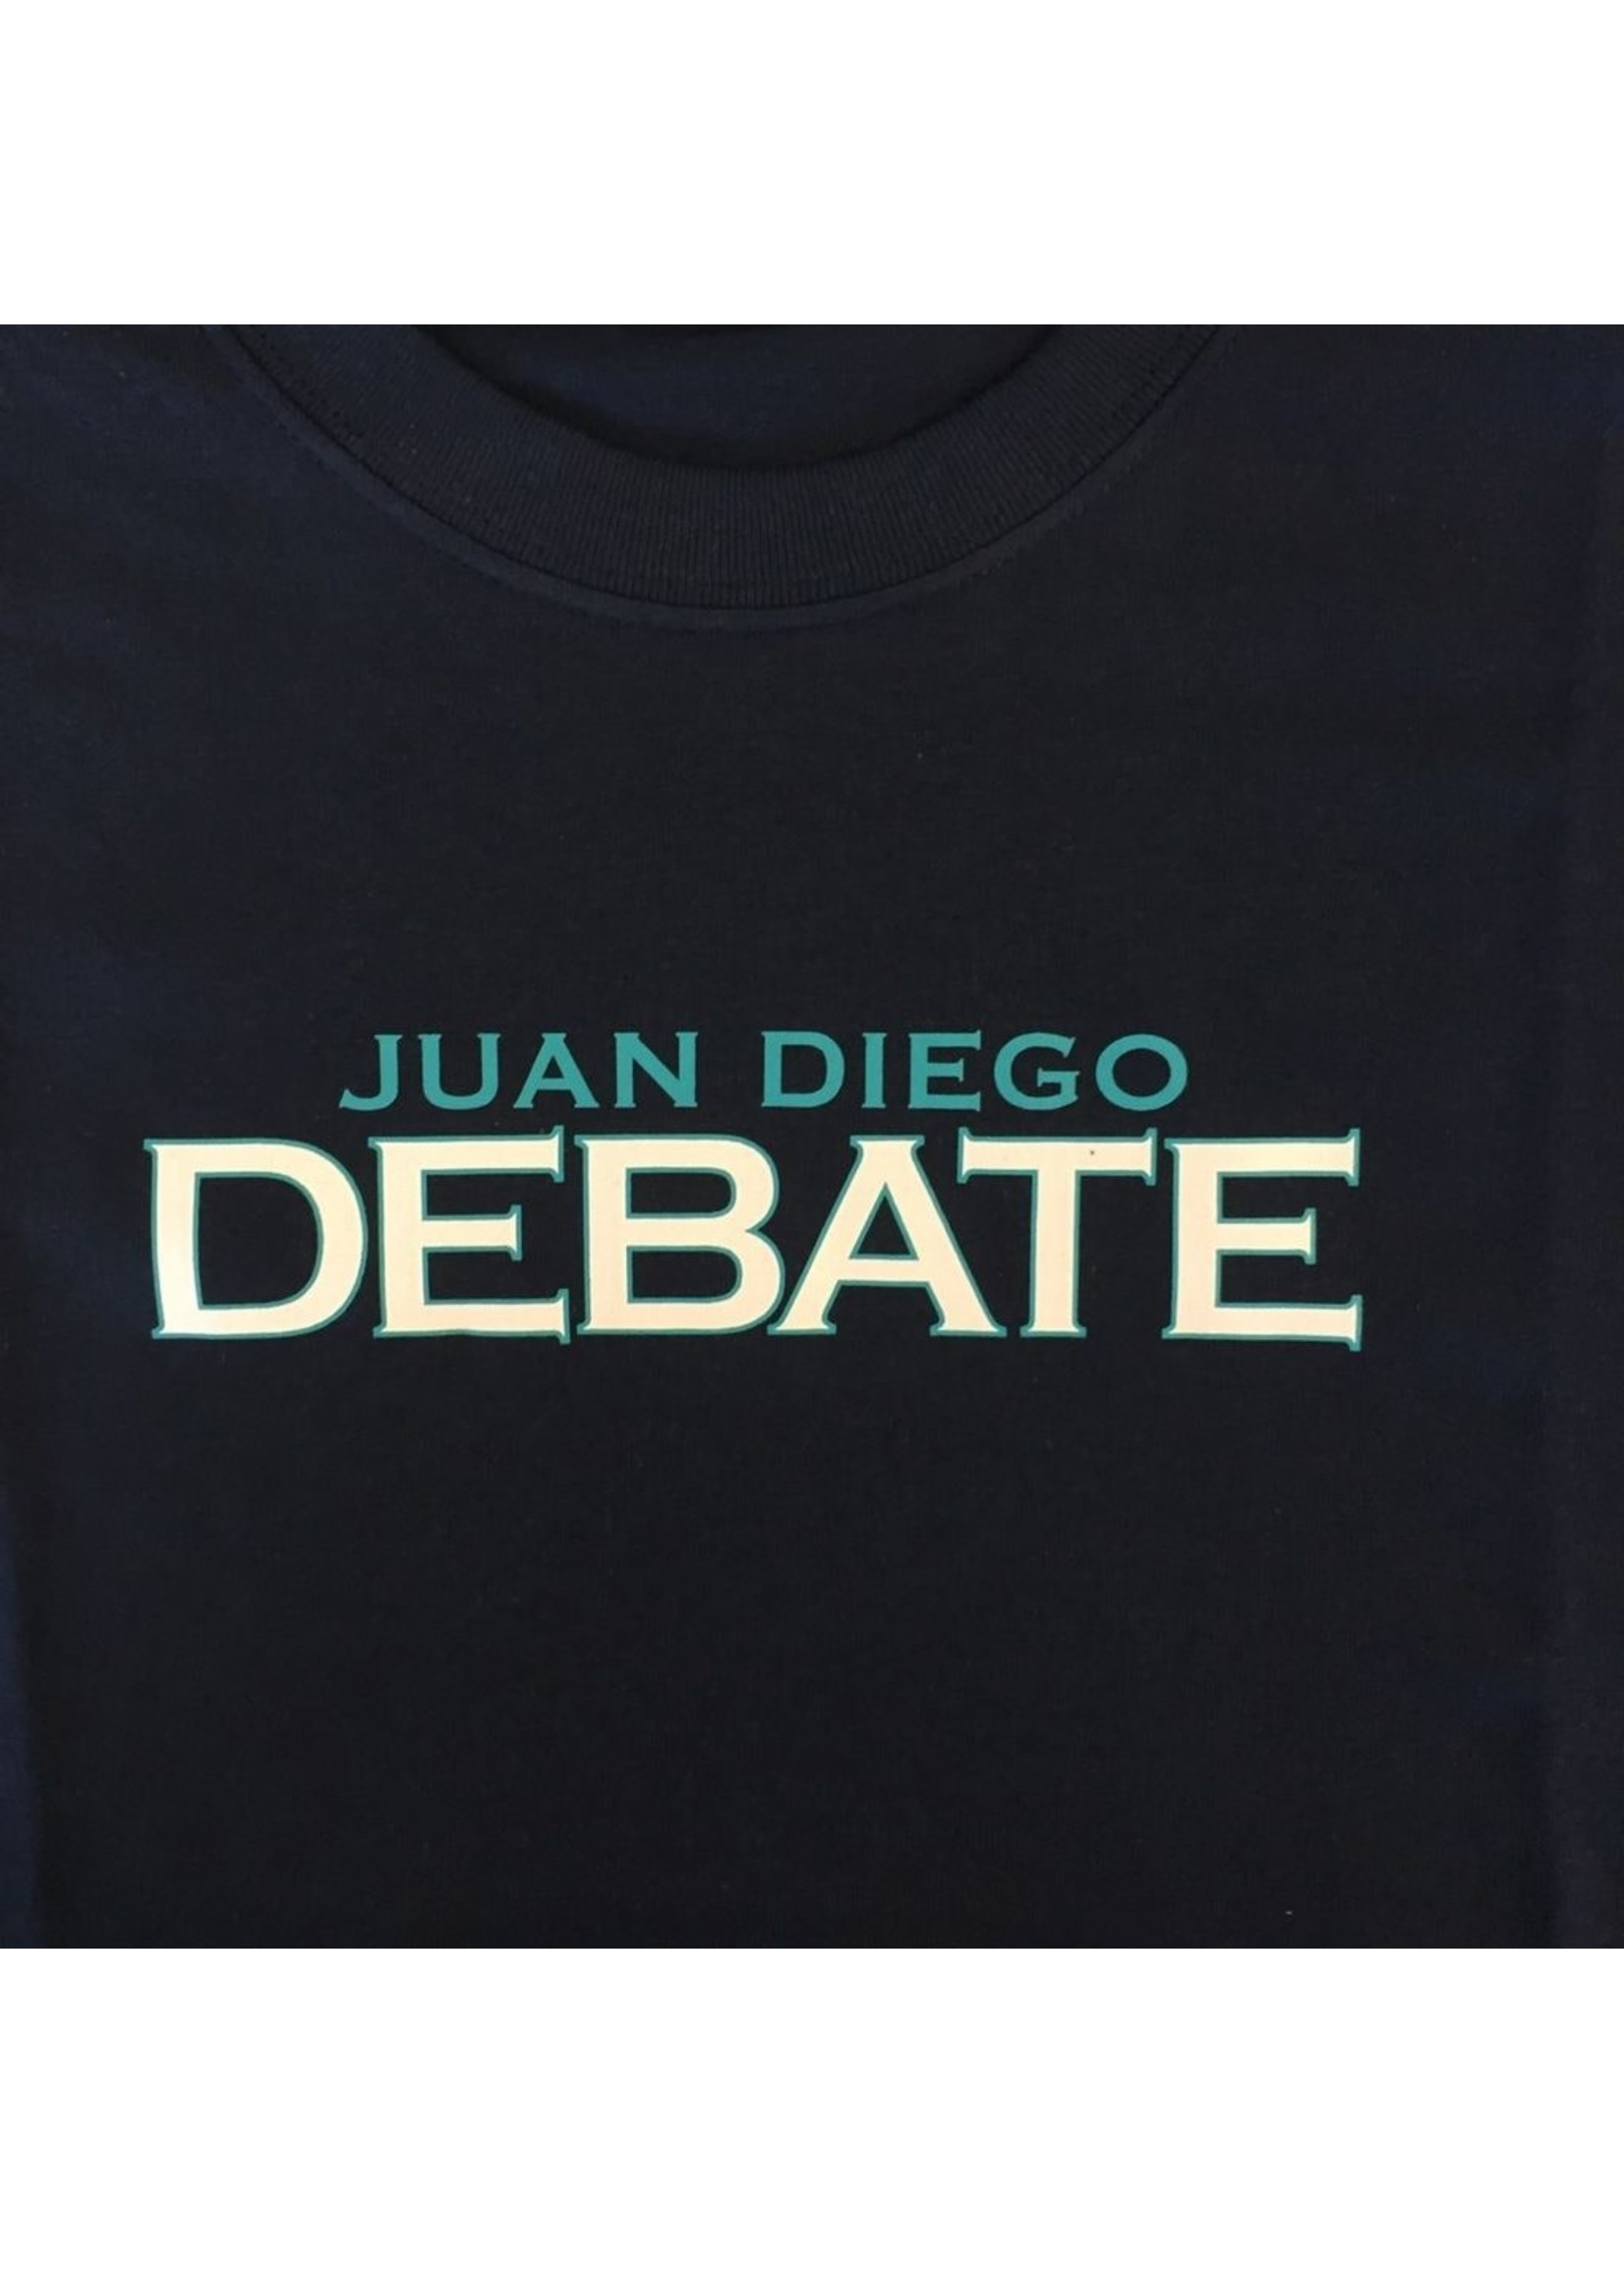 NON-UNIFORM Debate, Juan Diego Debate Custom Order Navy Unisex s/s t-shirt